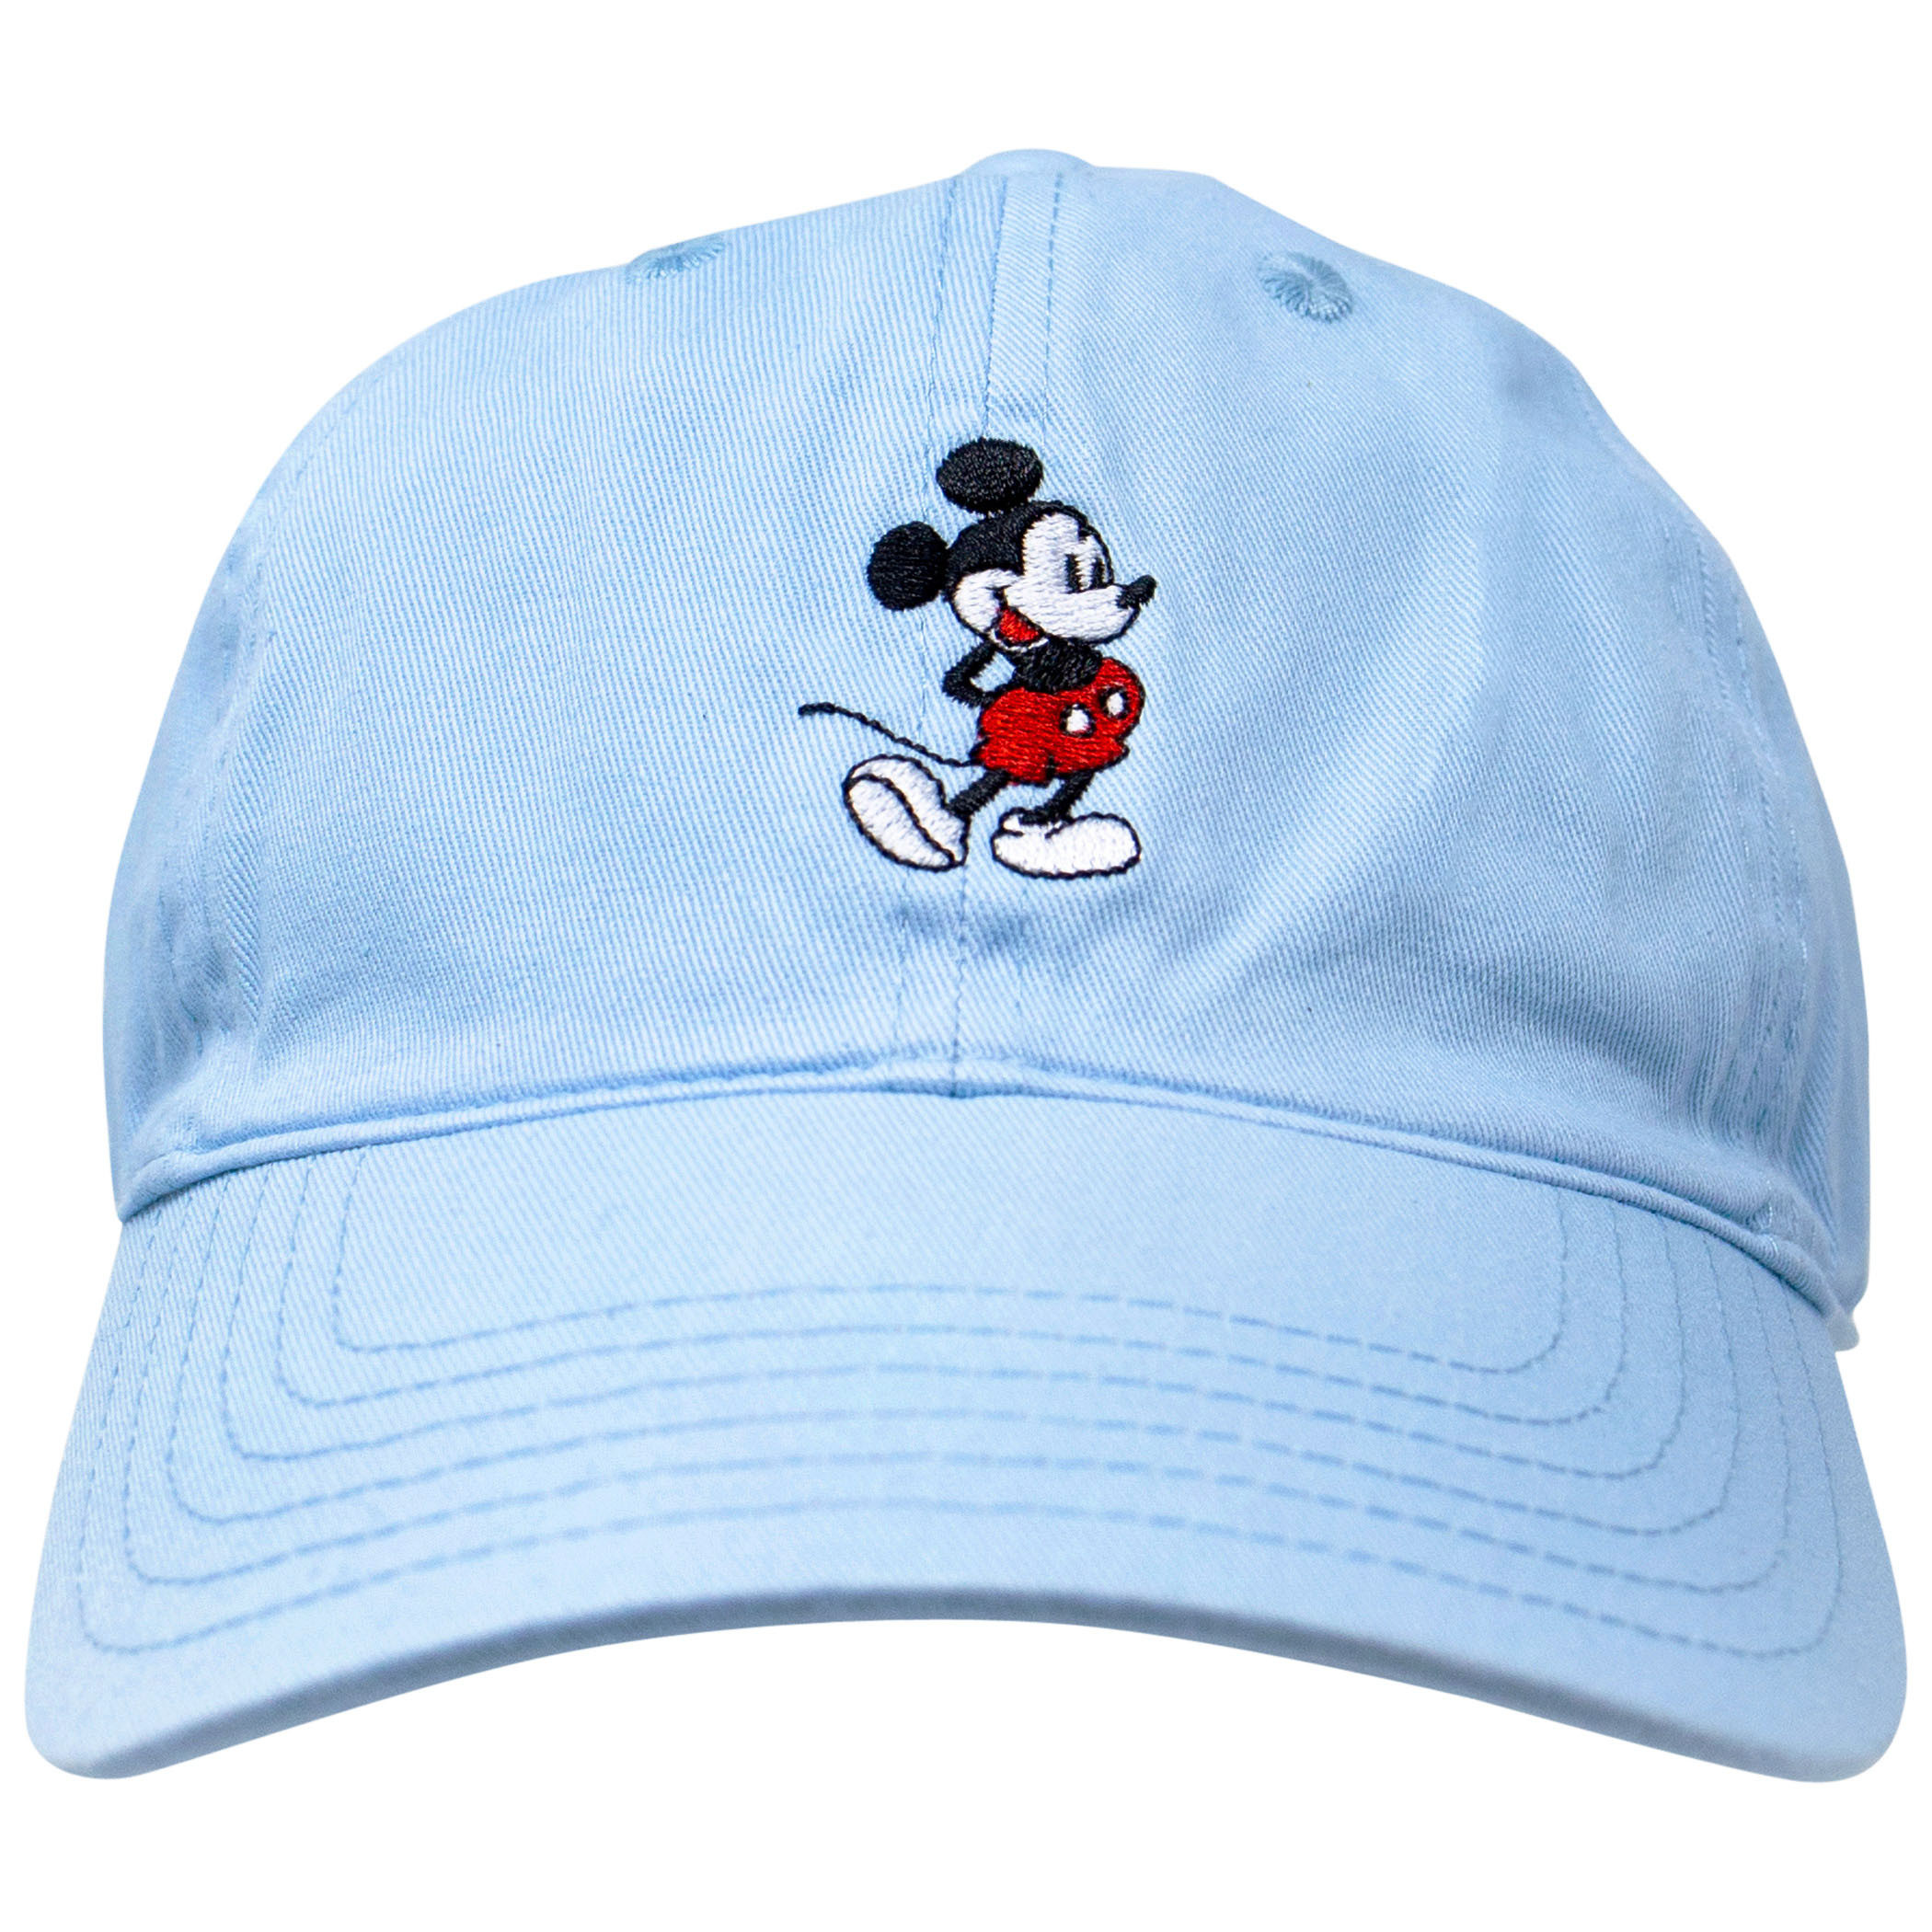 Disney Mickey Mouse Light Blue Dad Hat